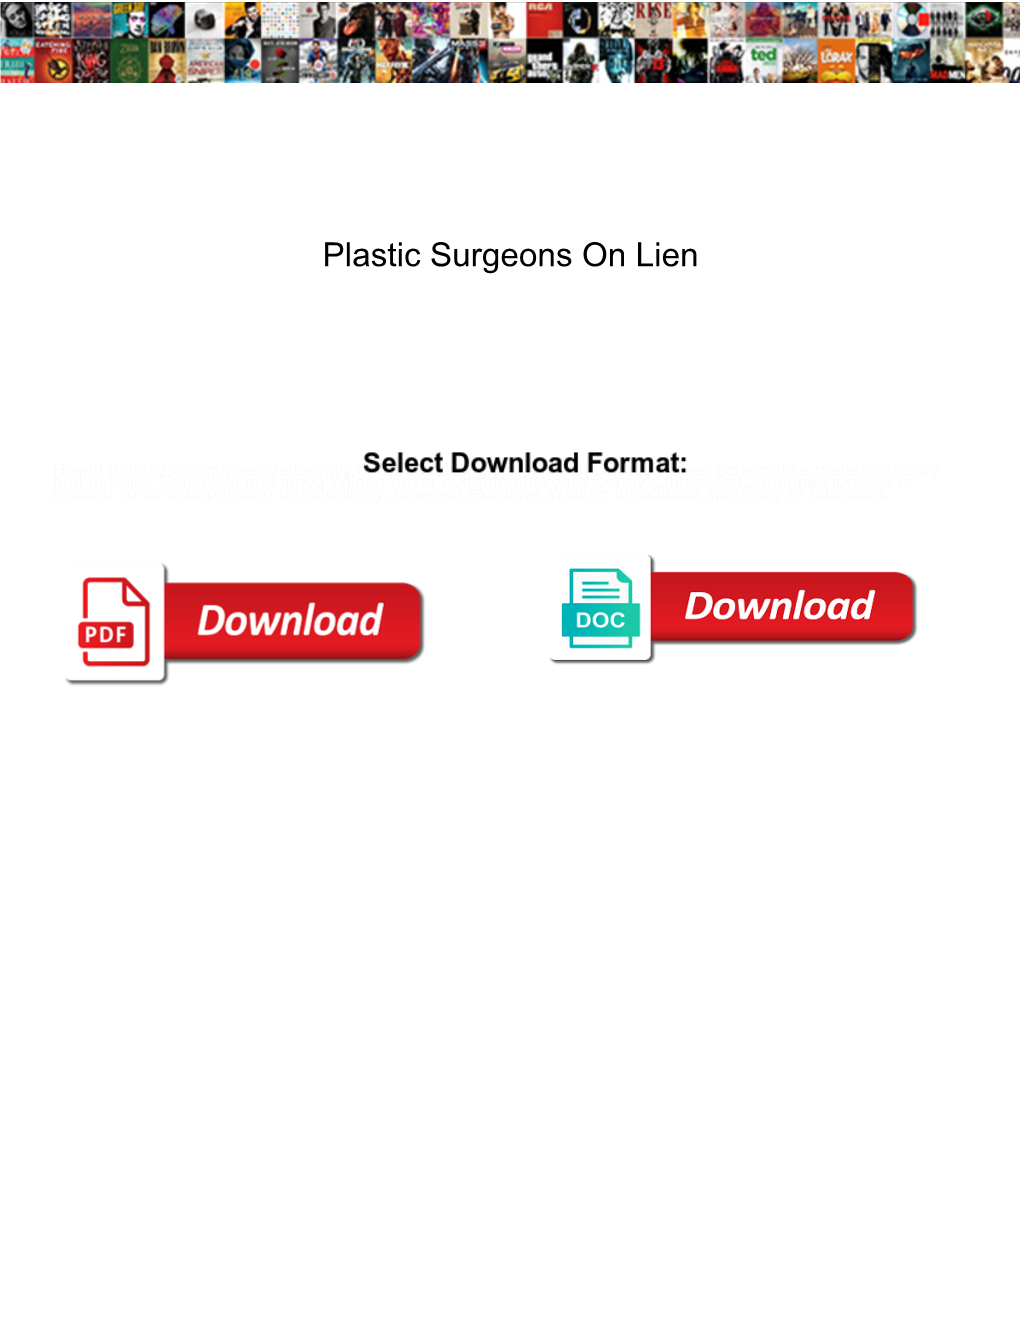 Plastic Surgeons on Lien